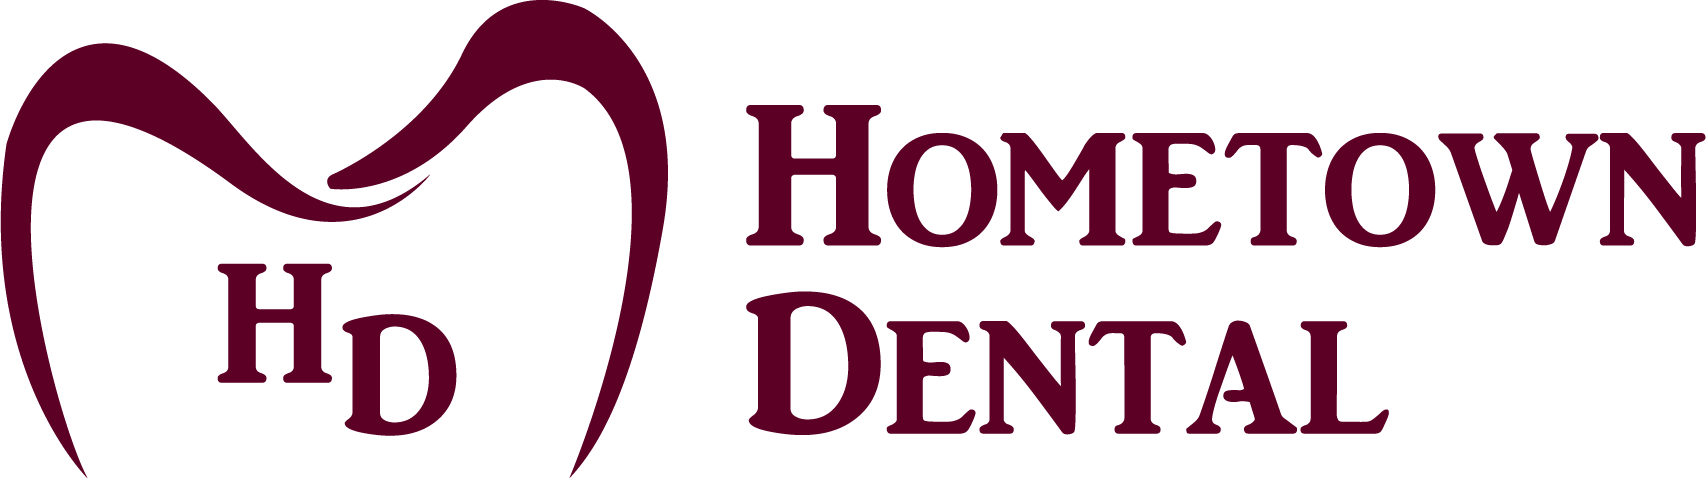 Hometown Dental | Sedalia, MO